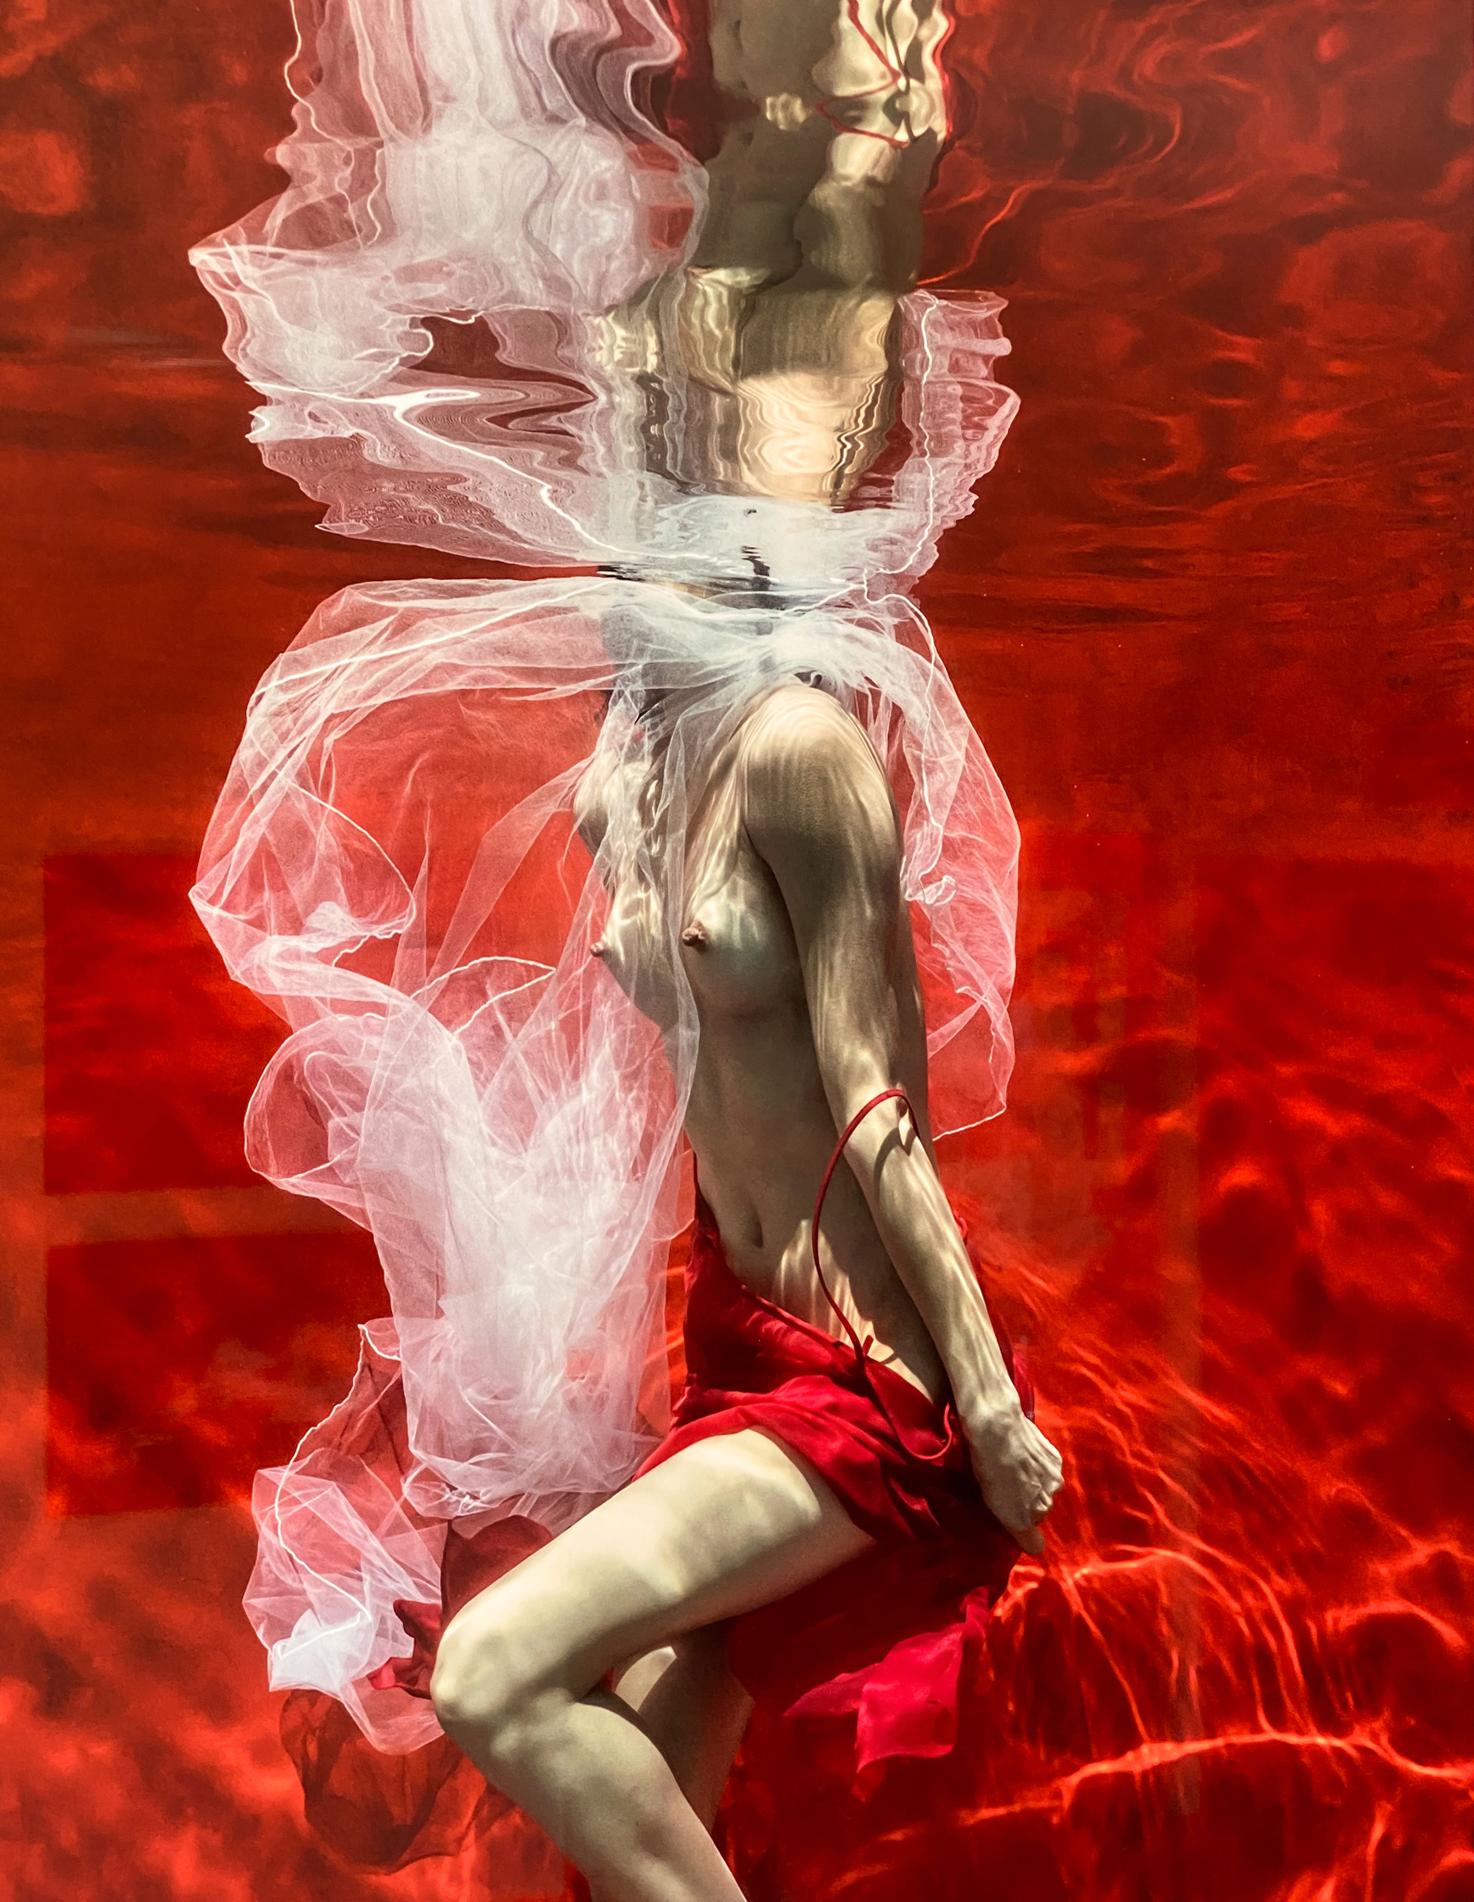 Blood and Milk III   - underwater nude photograph - print on aluminum 36x24